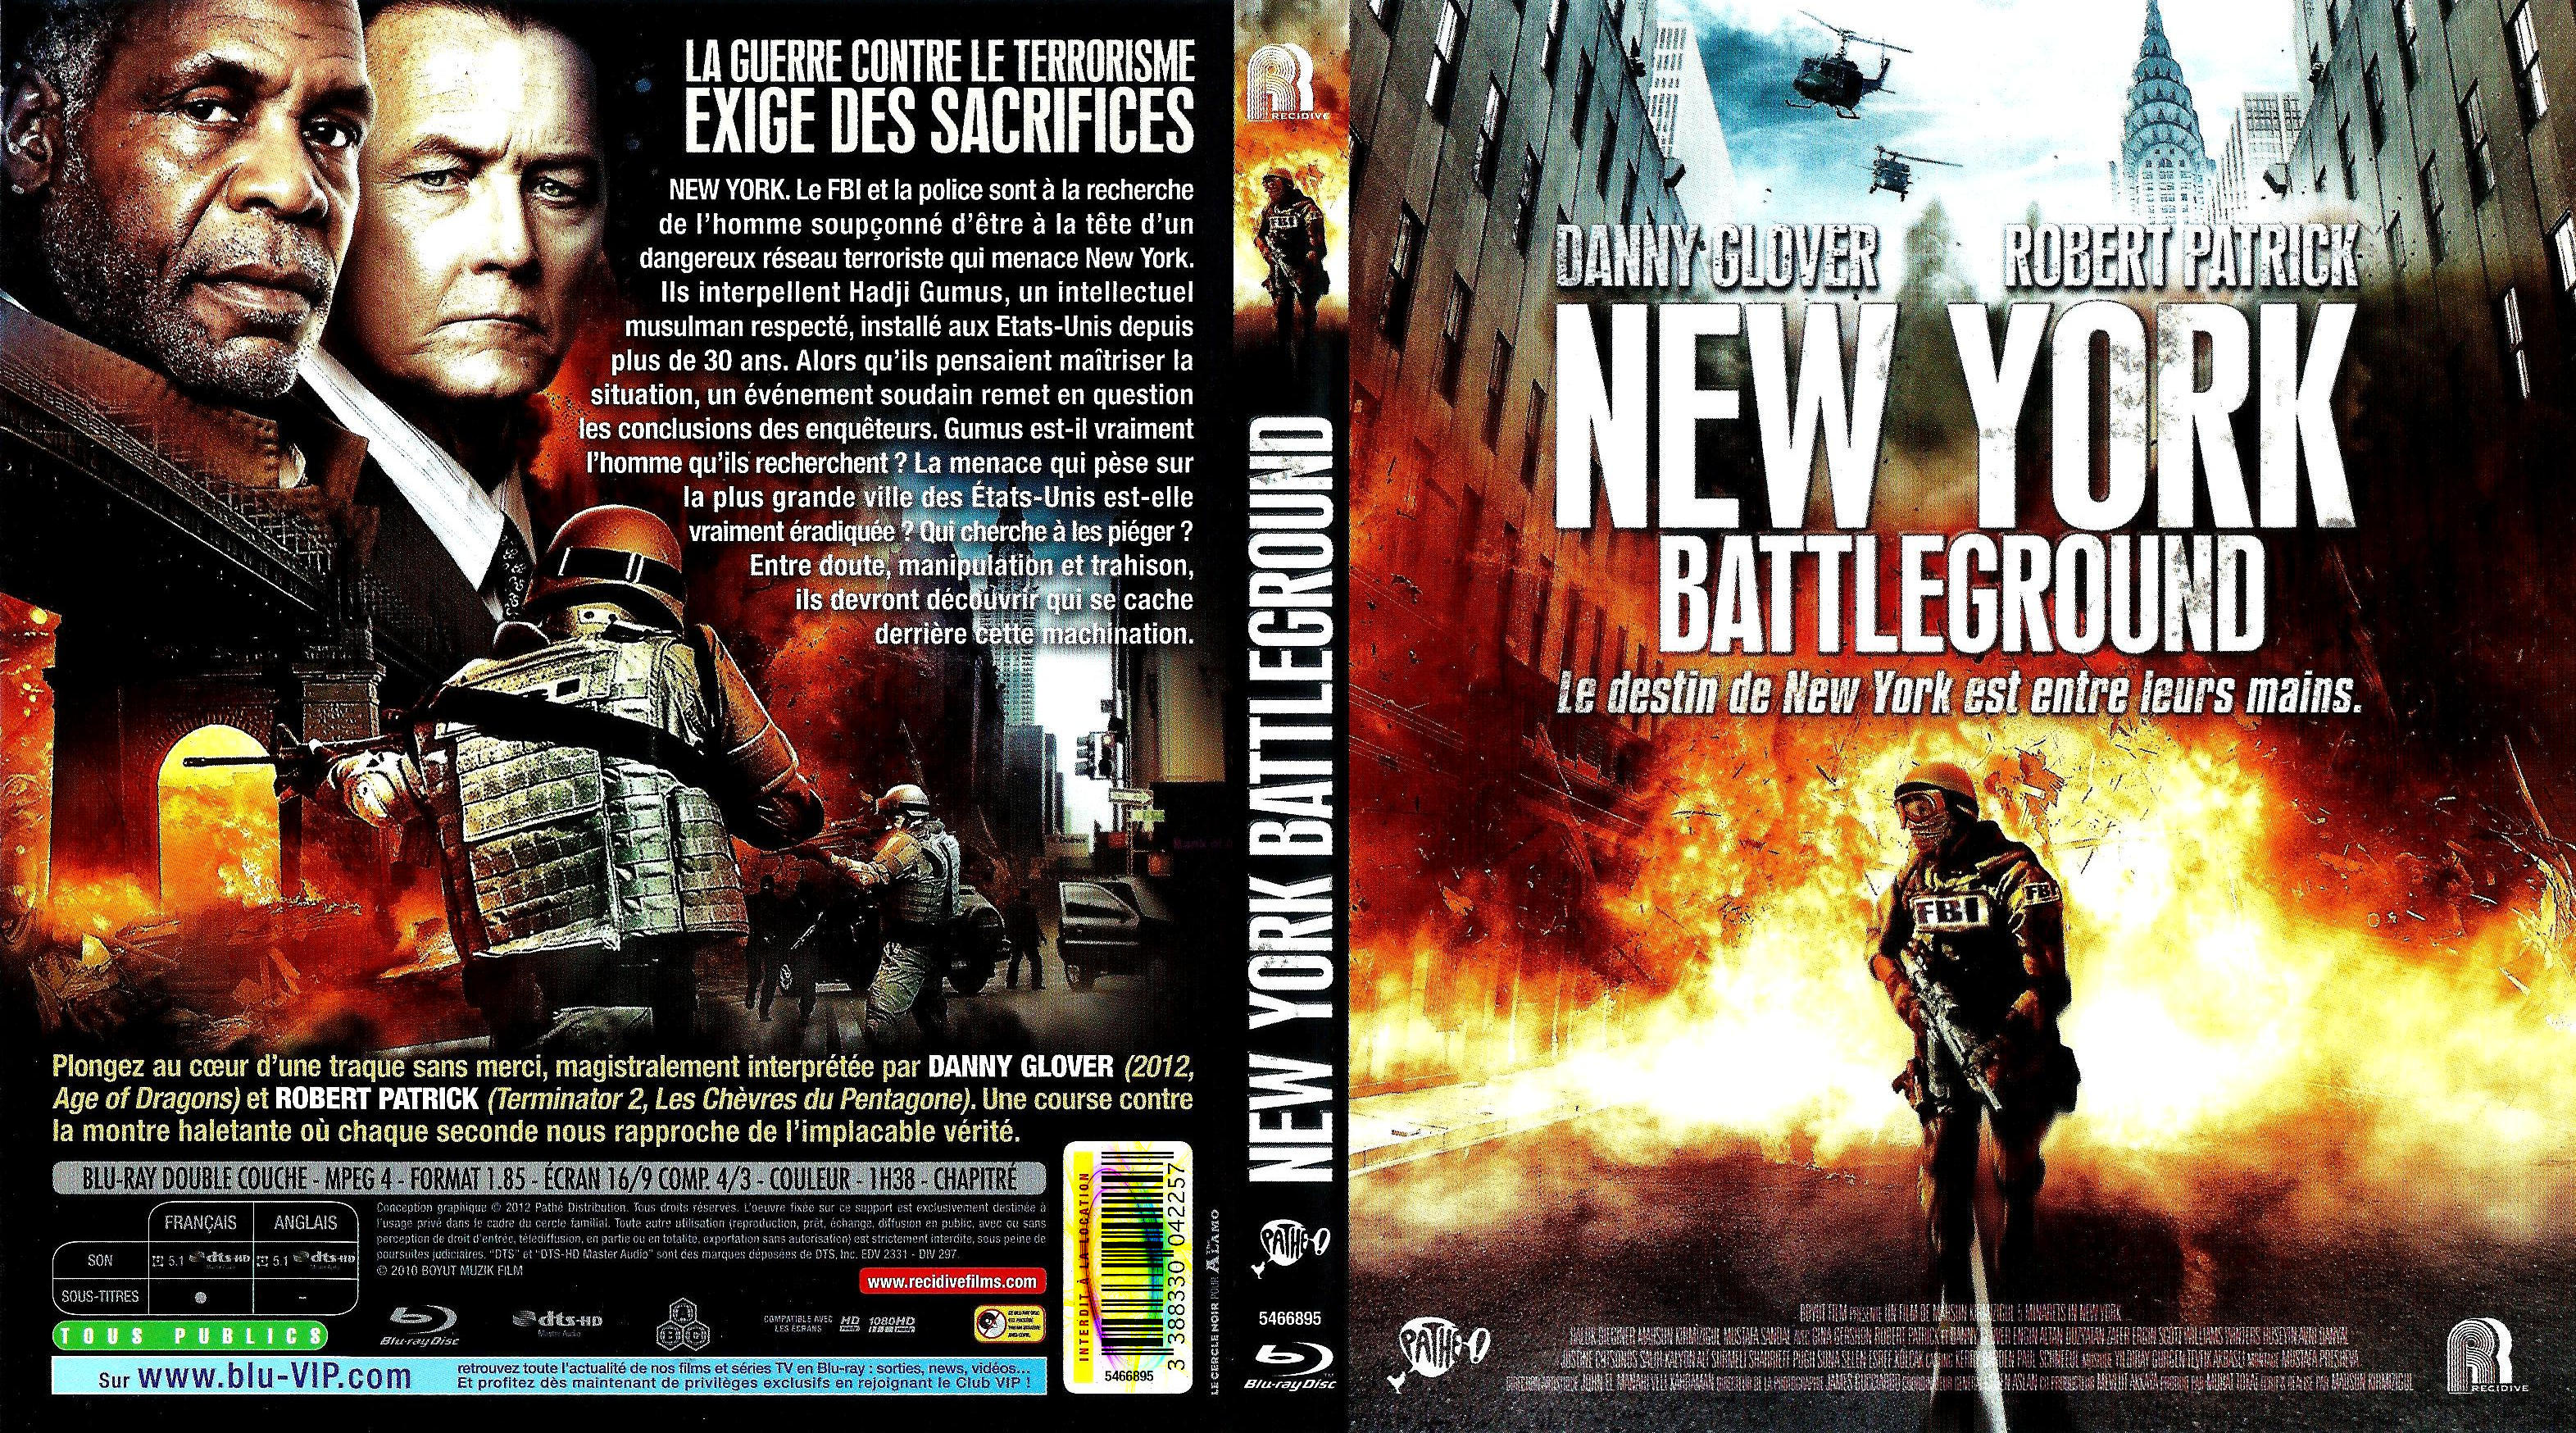 Jaquette DVD New york battleground (BLU-RAY)